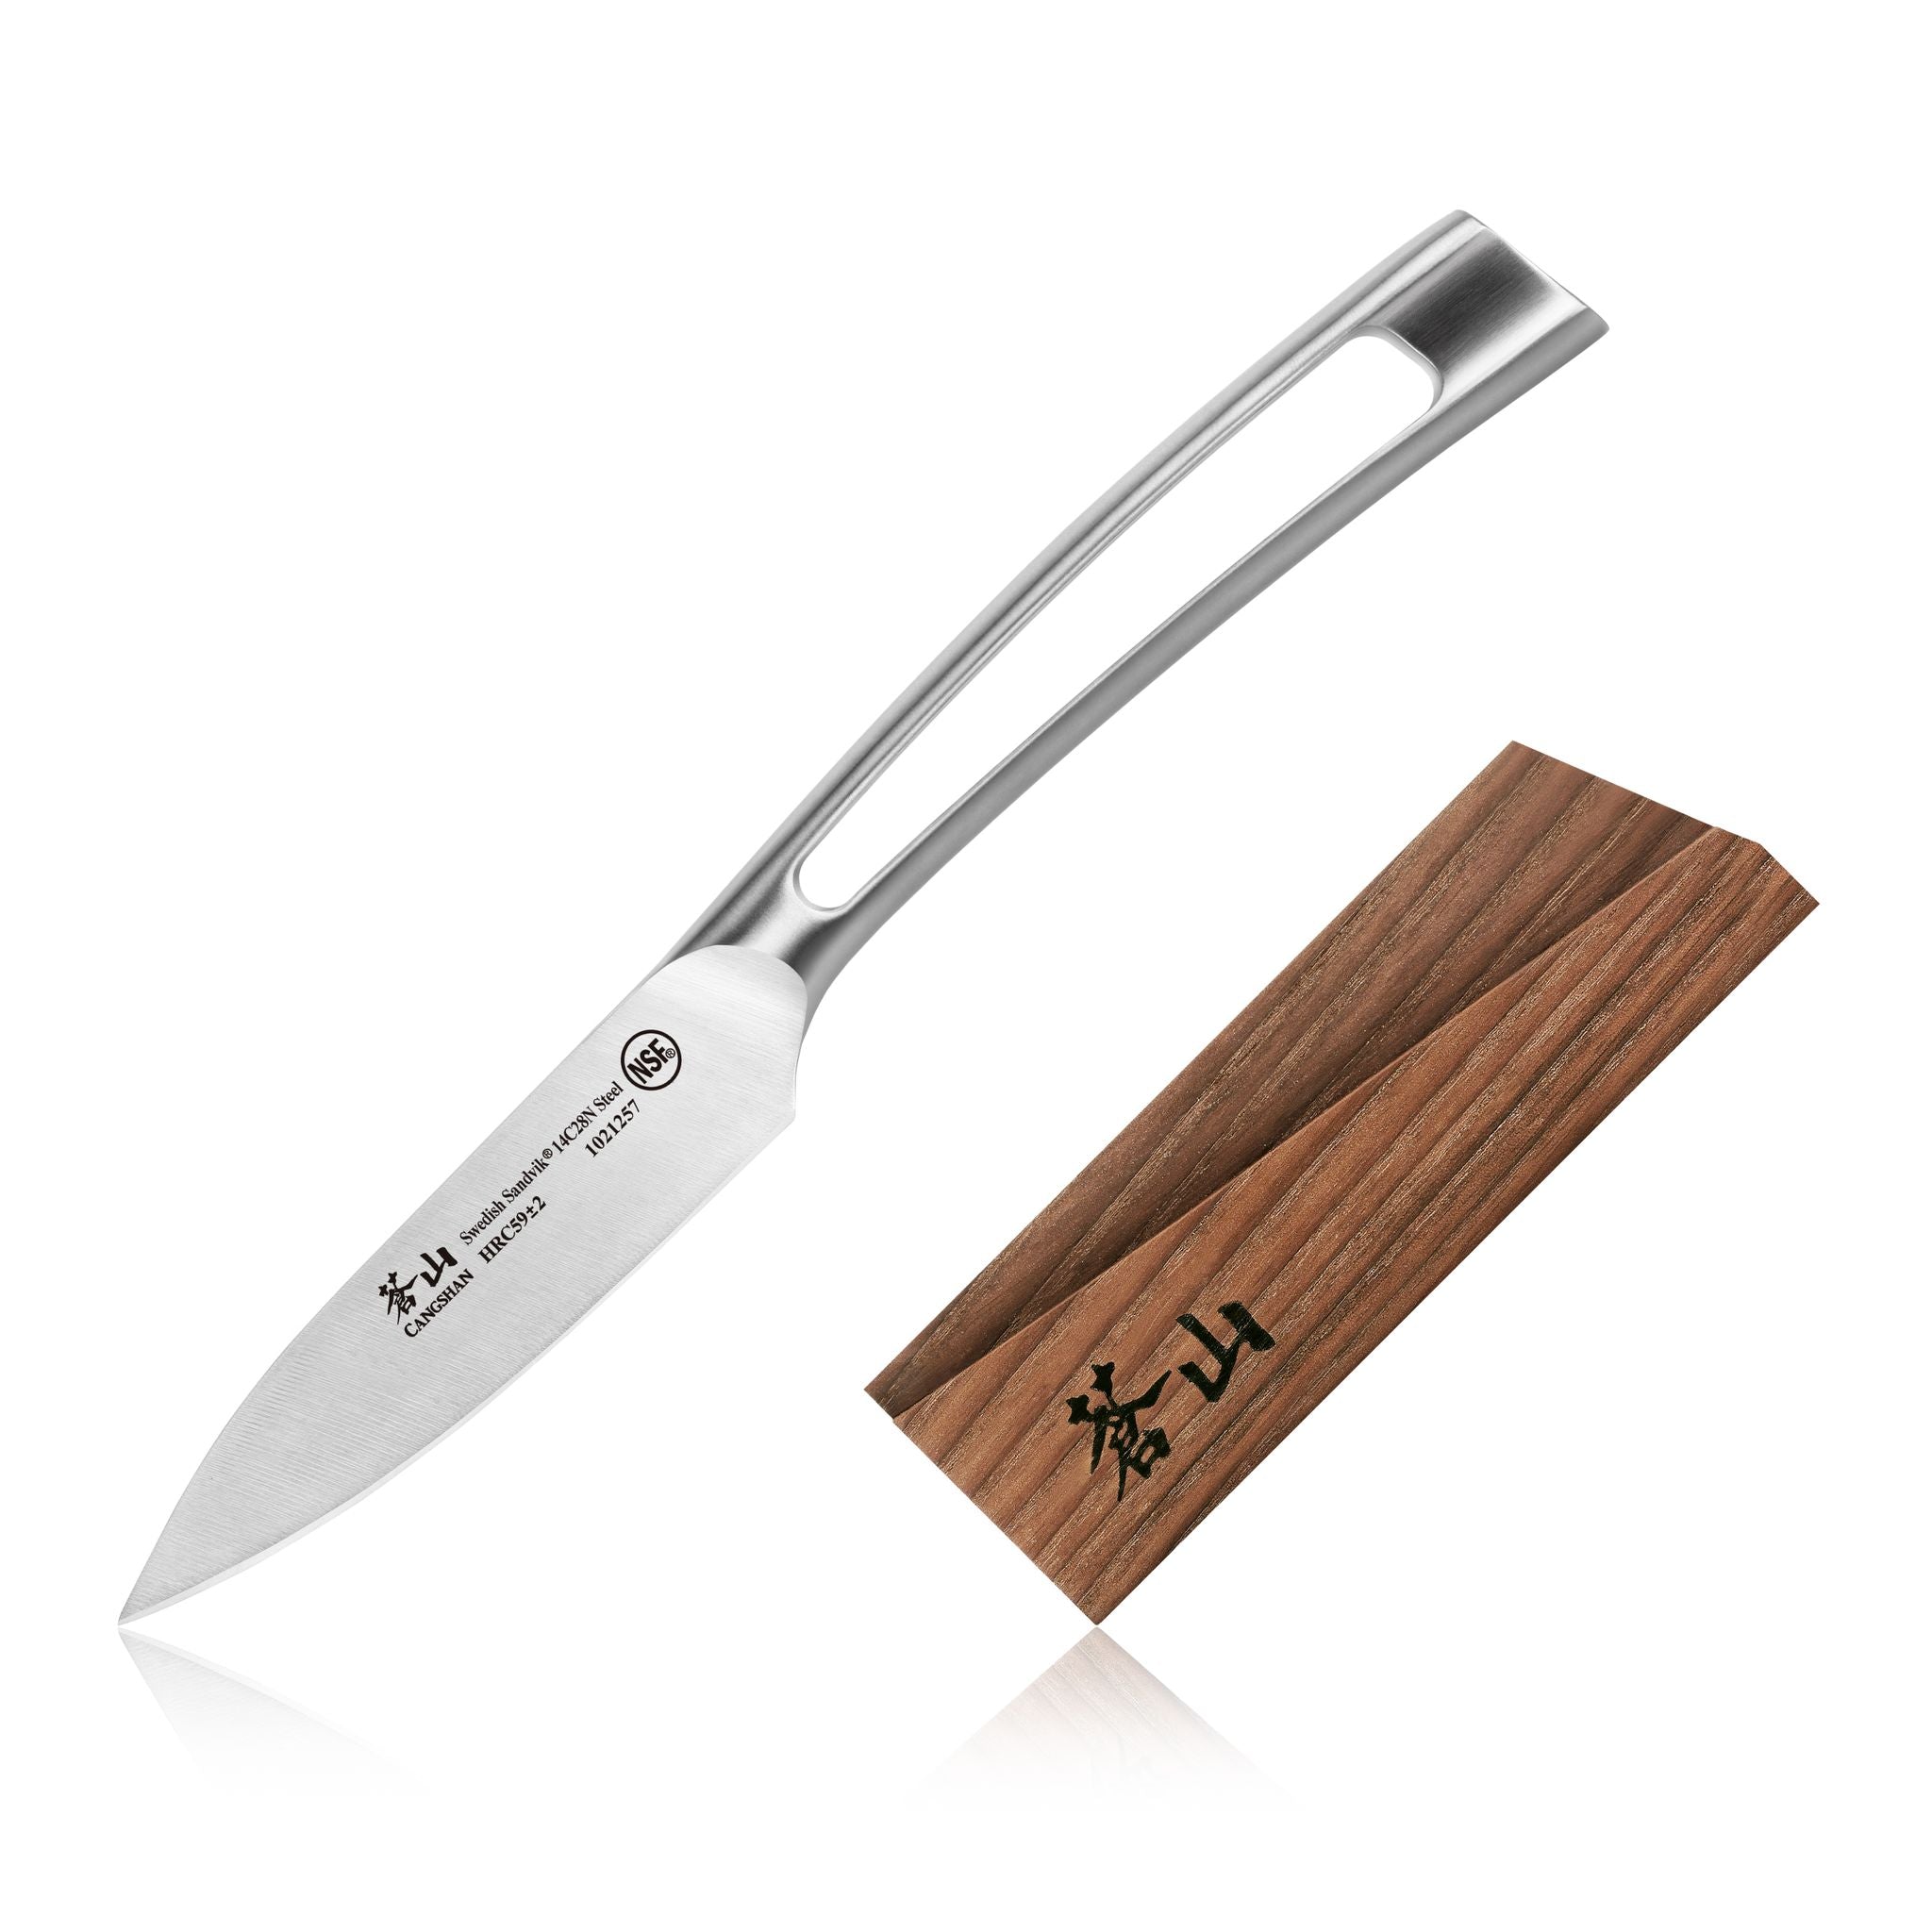 14C2 Cangshan 3.5-Inch Forged – Cutlery Swedish Paring Series Knife Sheath, Wood Company with TN1